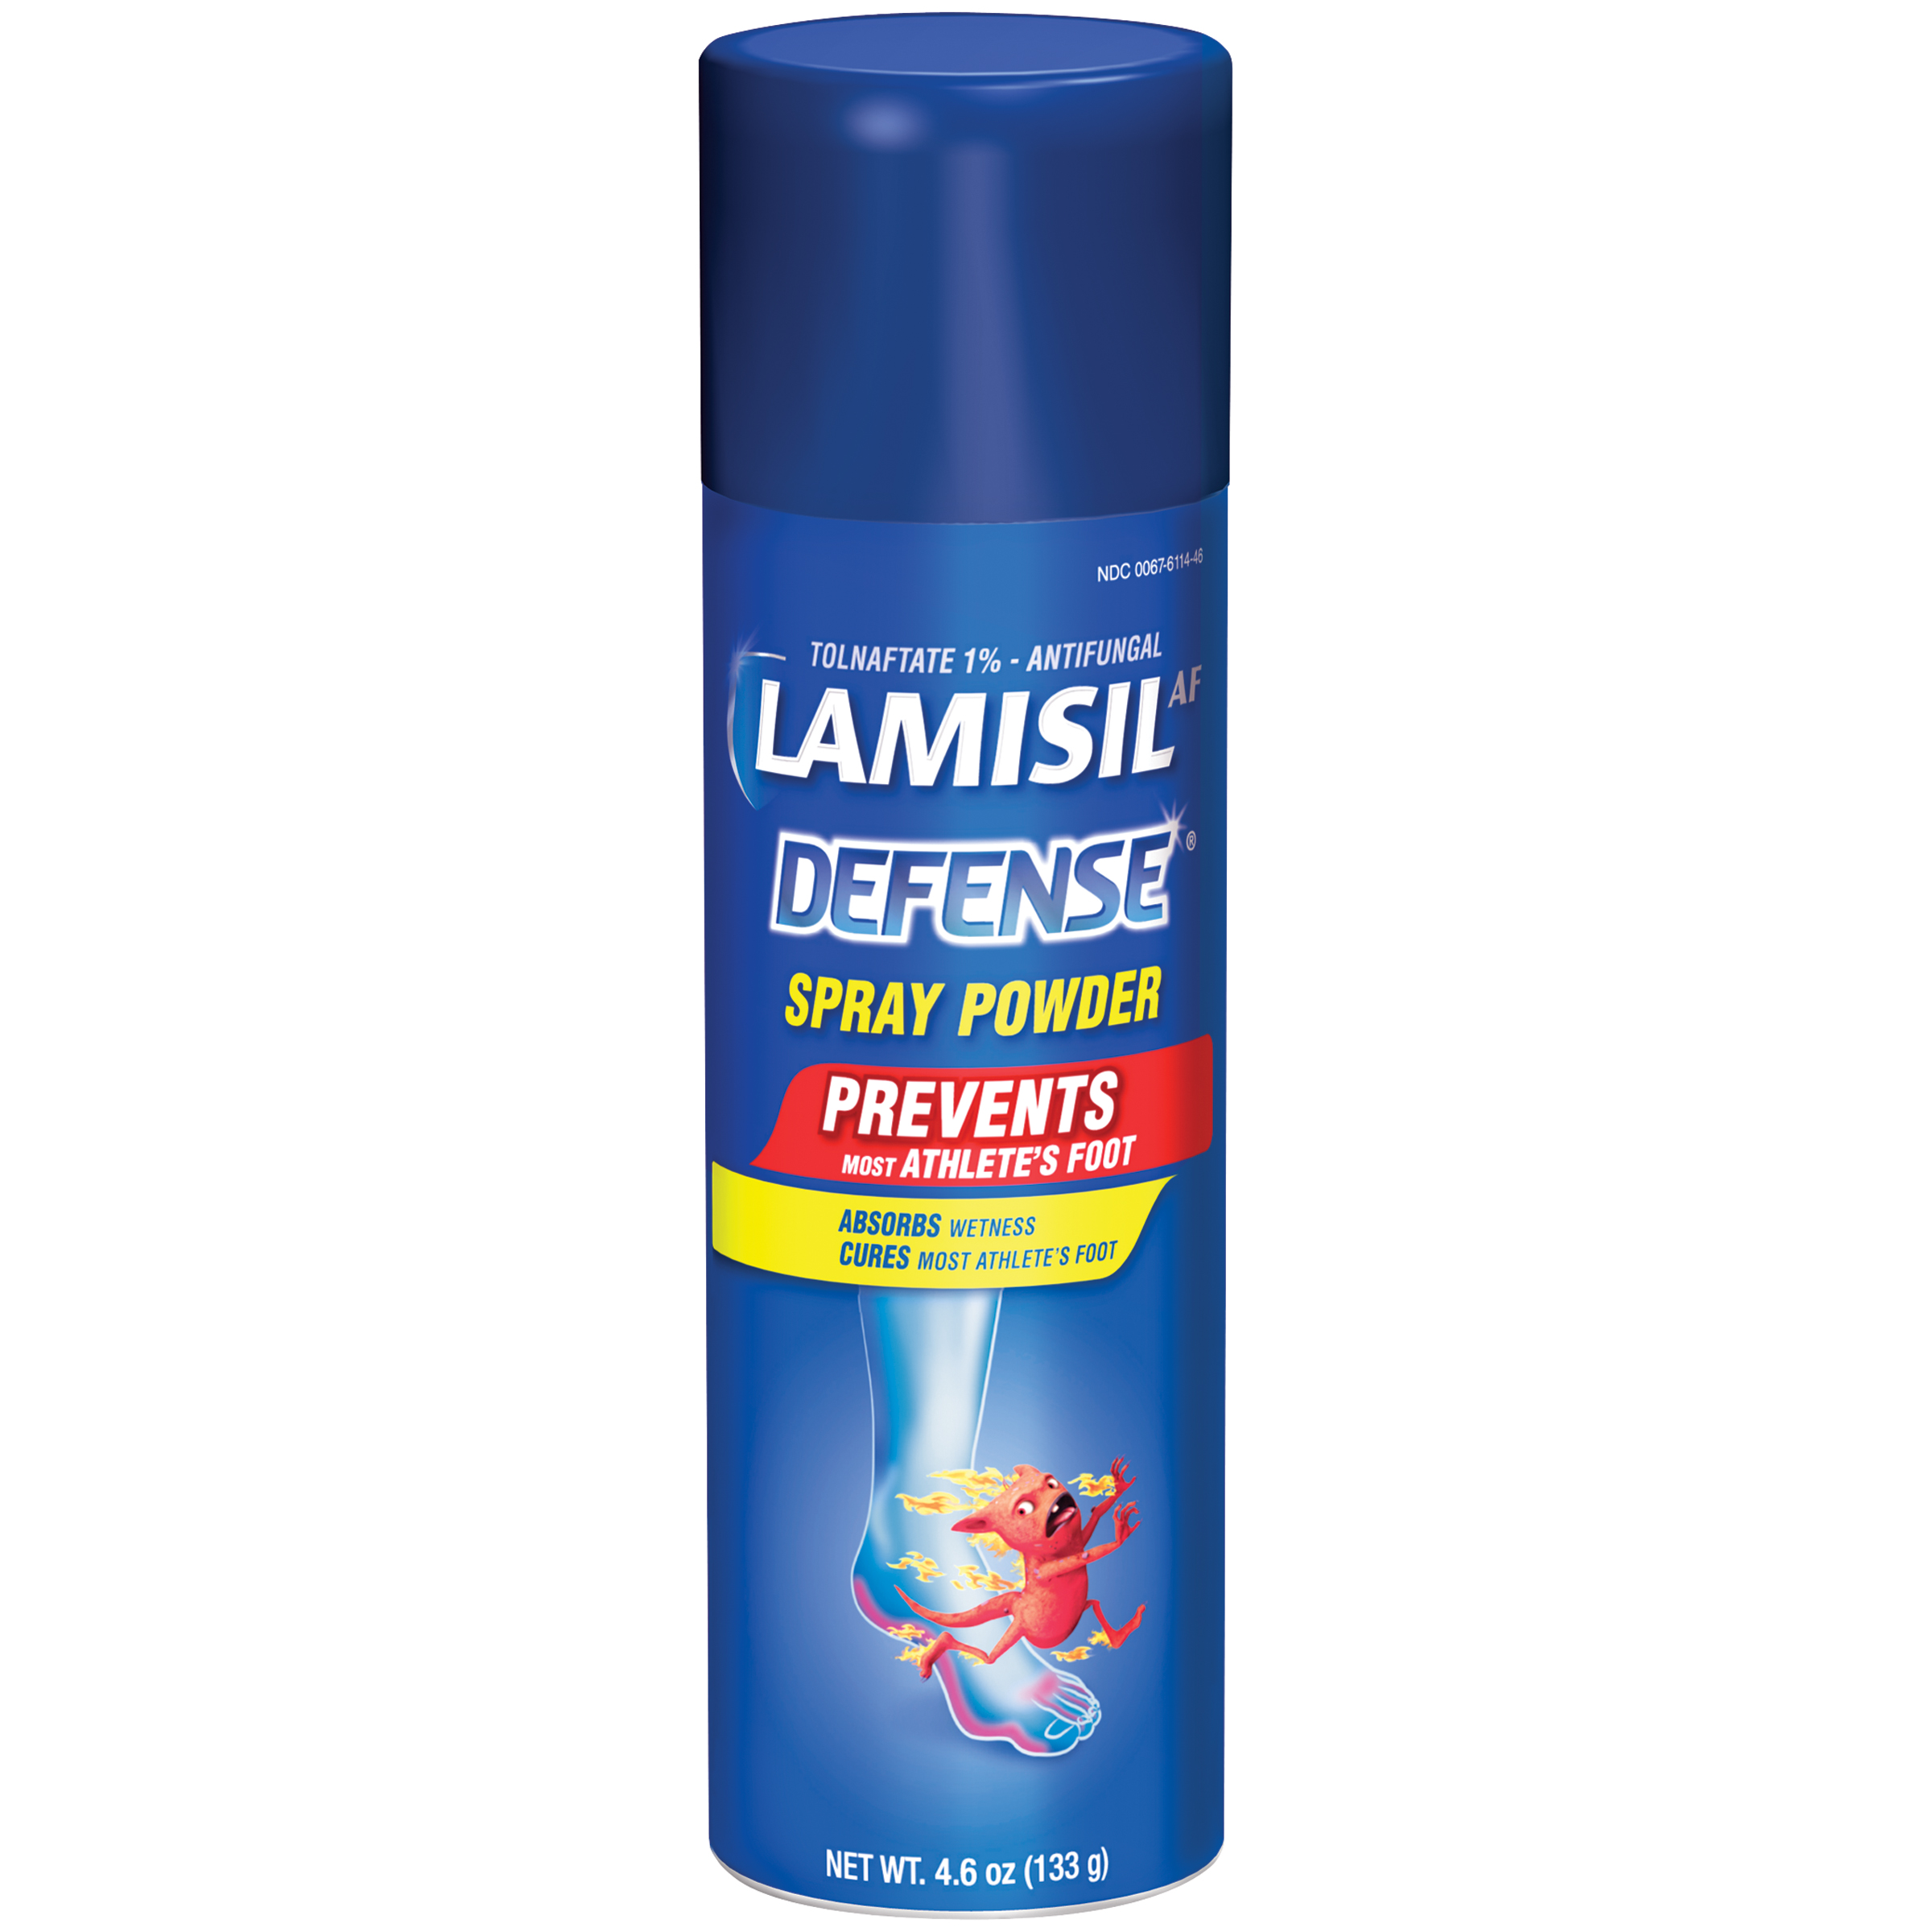 Lamisil Antifungal Defense Spray Powder 4.6 oz Beauty